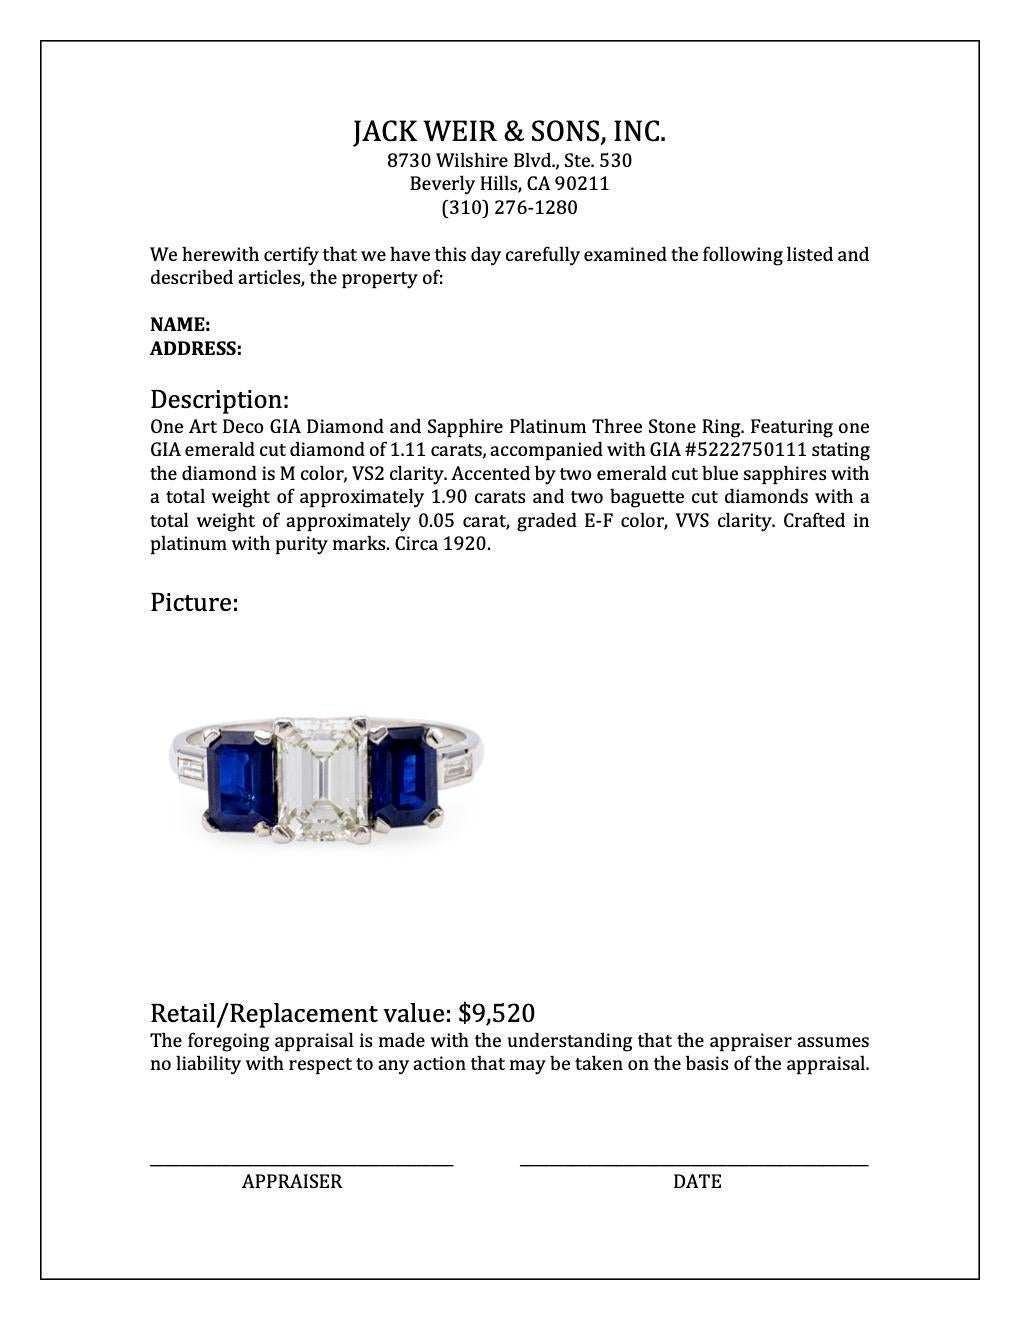 Art Deco GIA Diamond and Sapphire Platinum Three Stone Ring 3